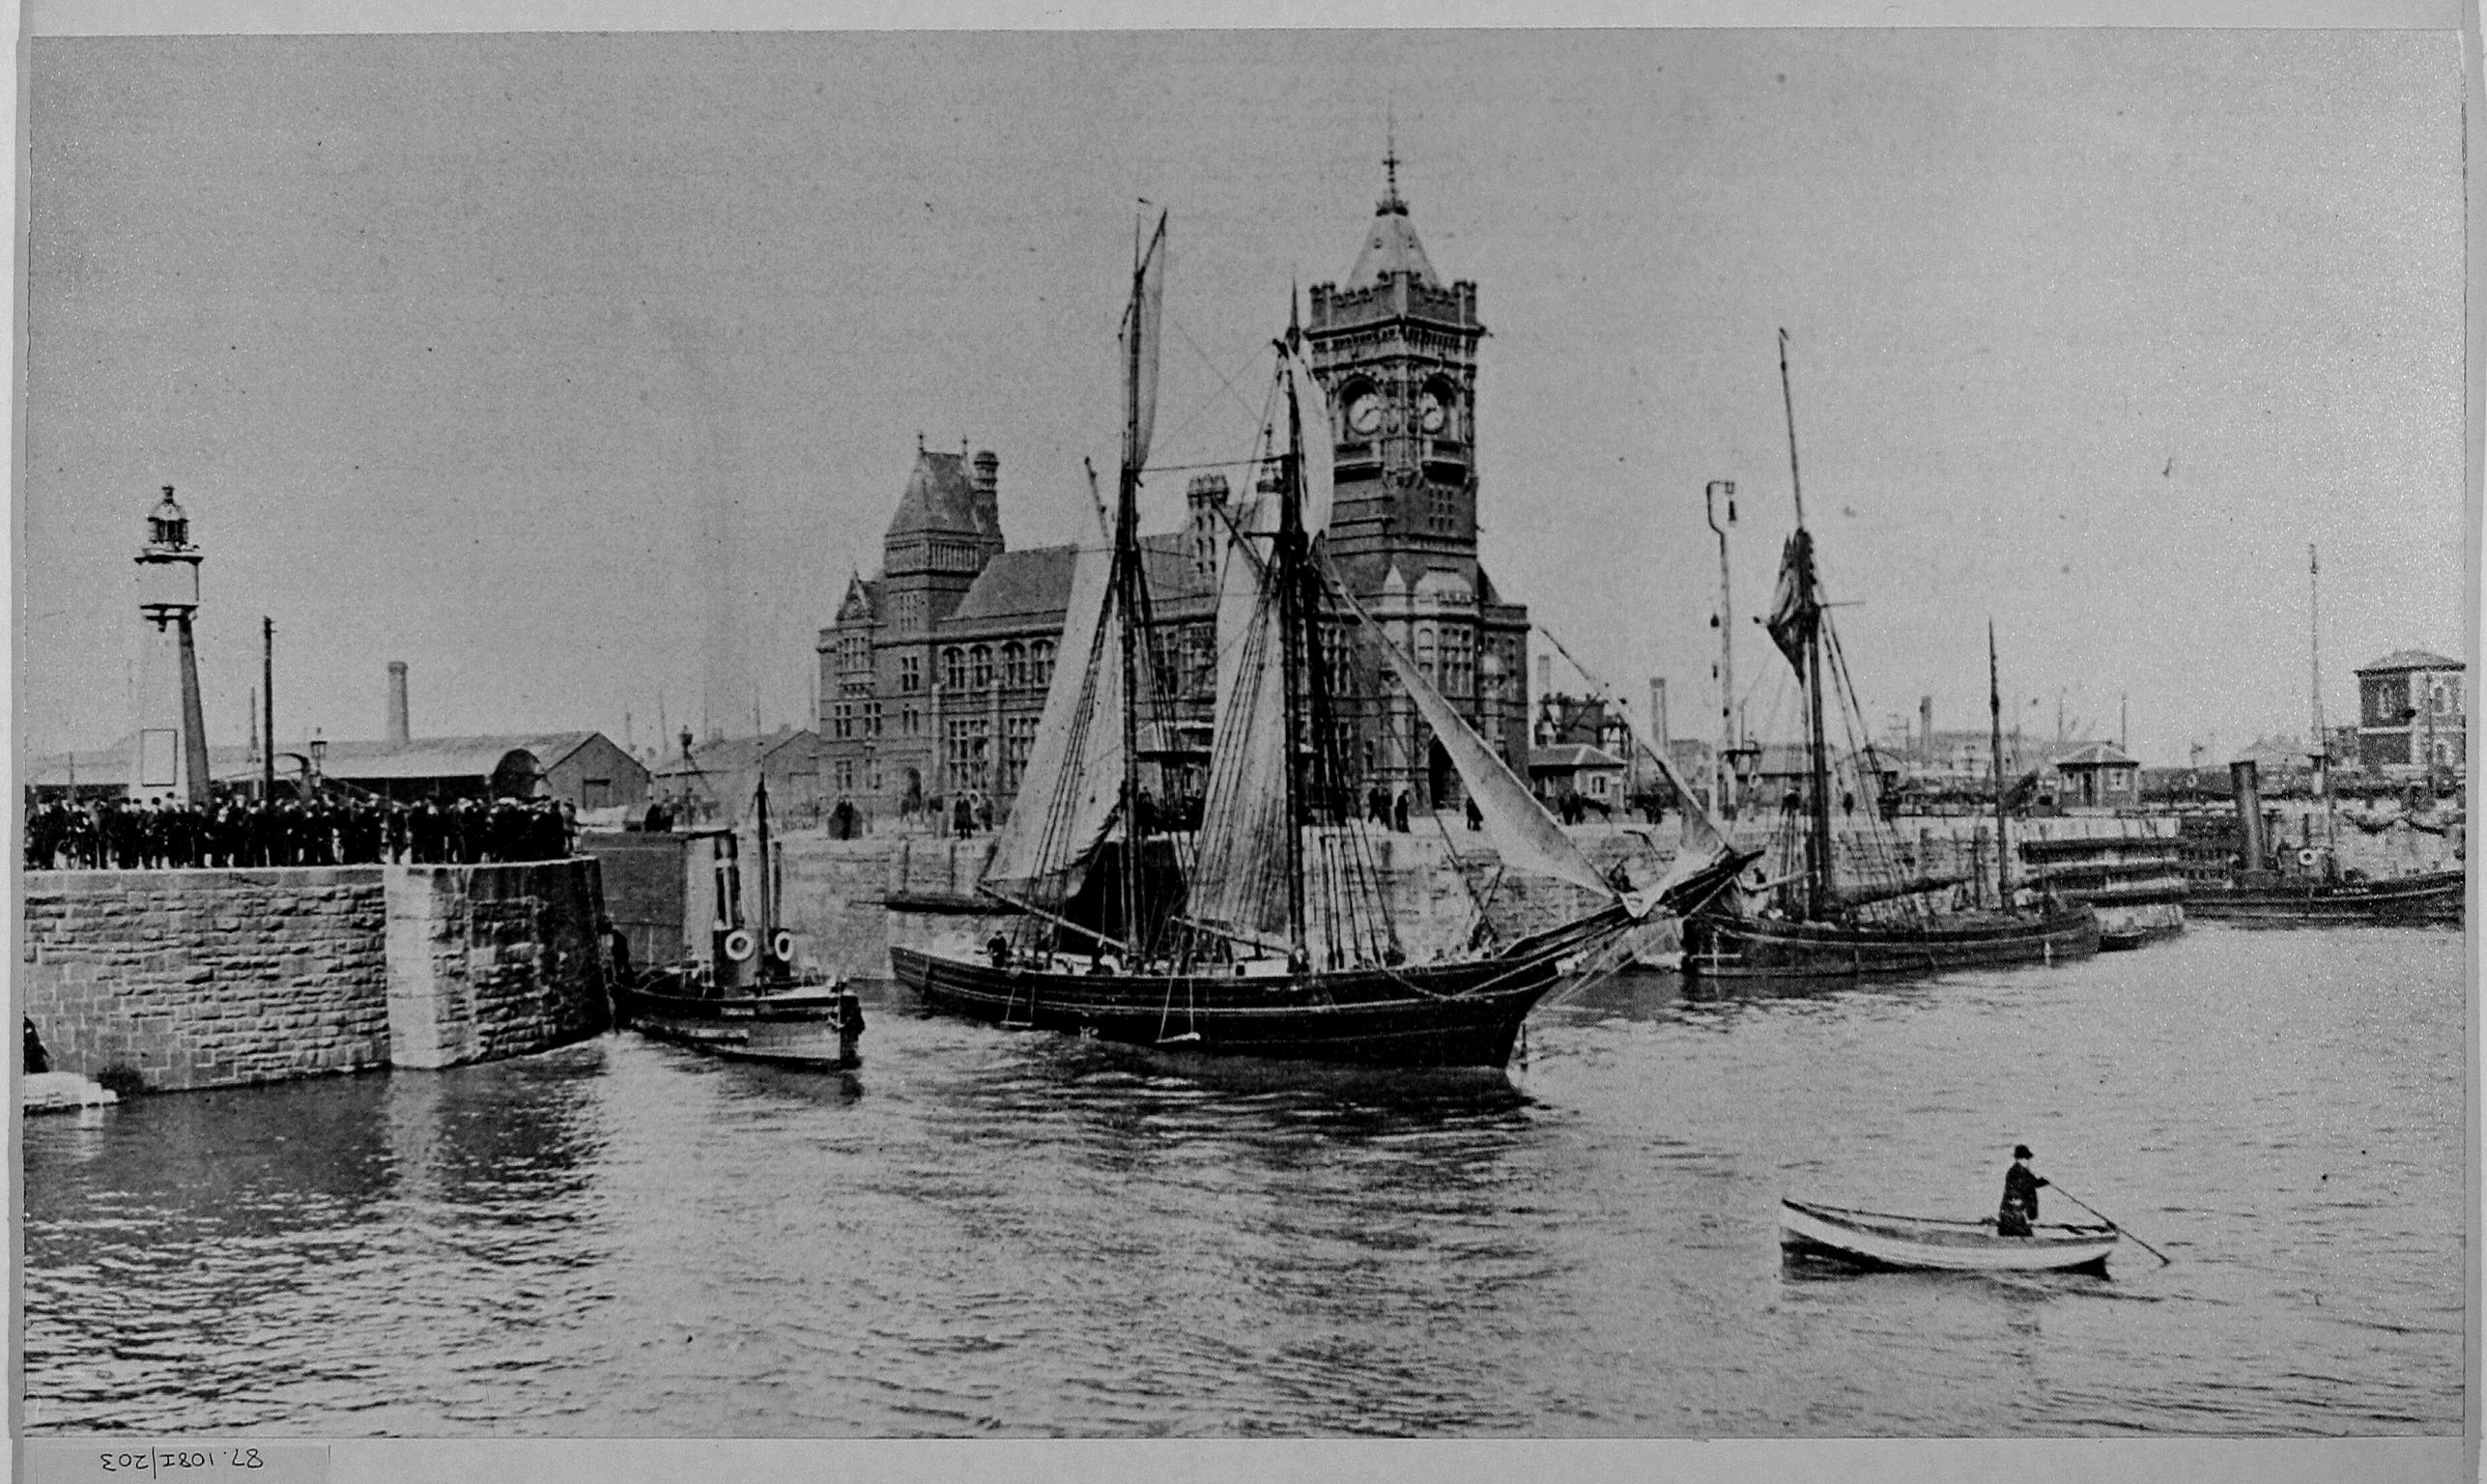 Bute West Dock, photograph